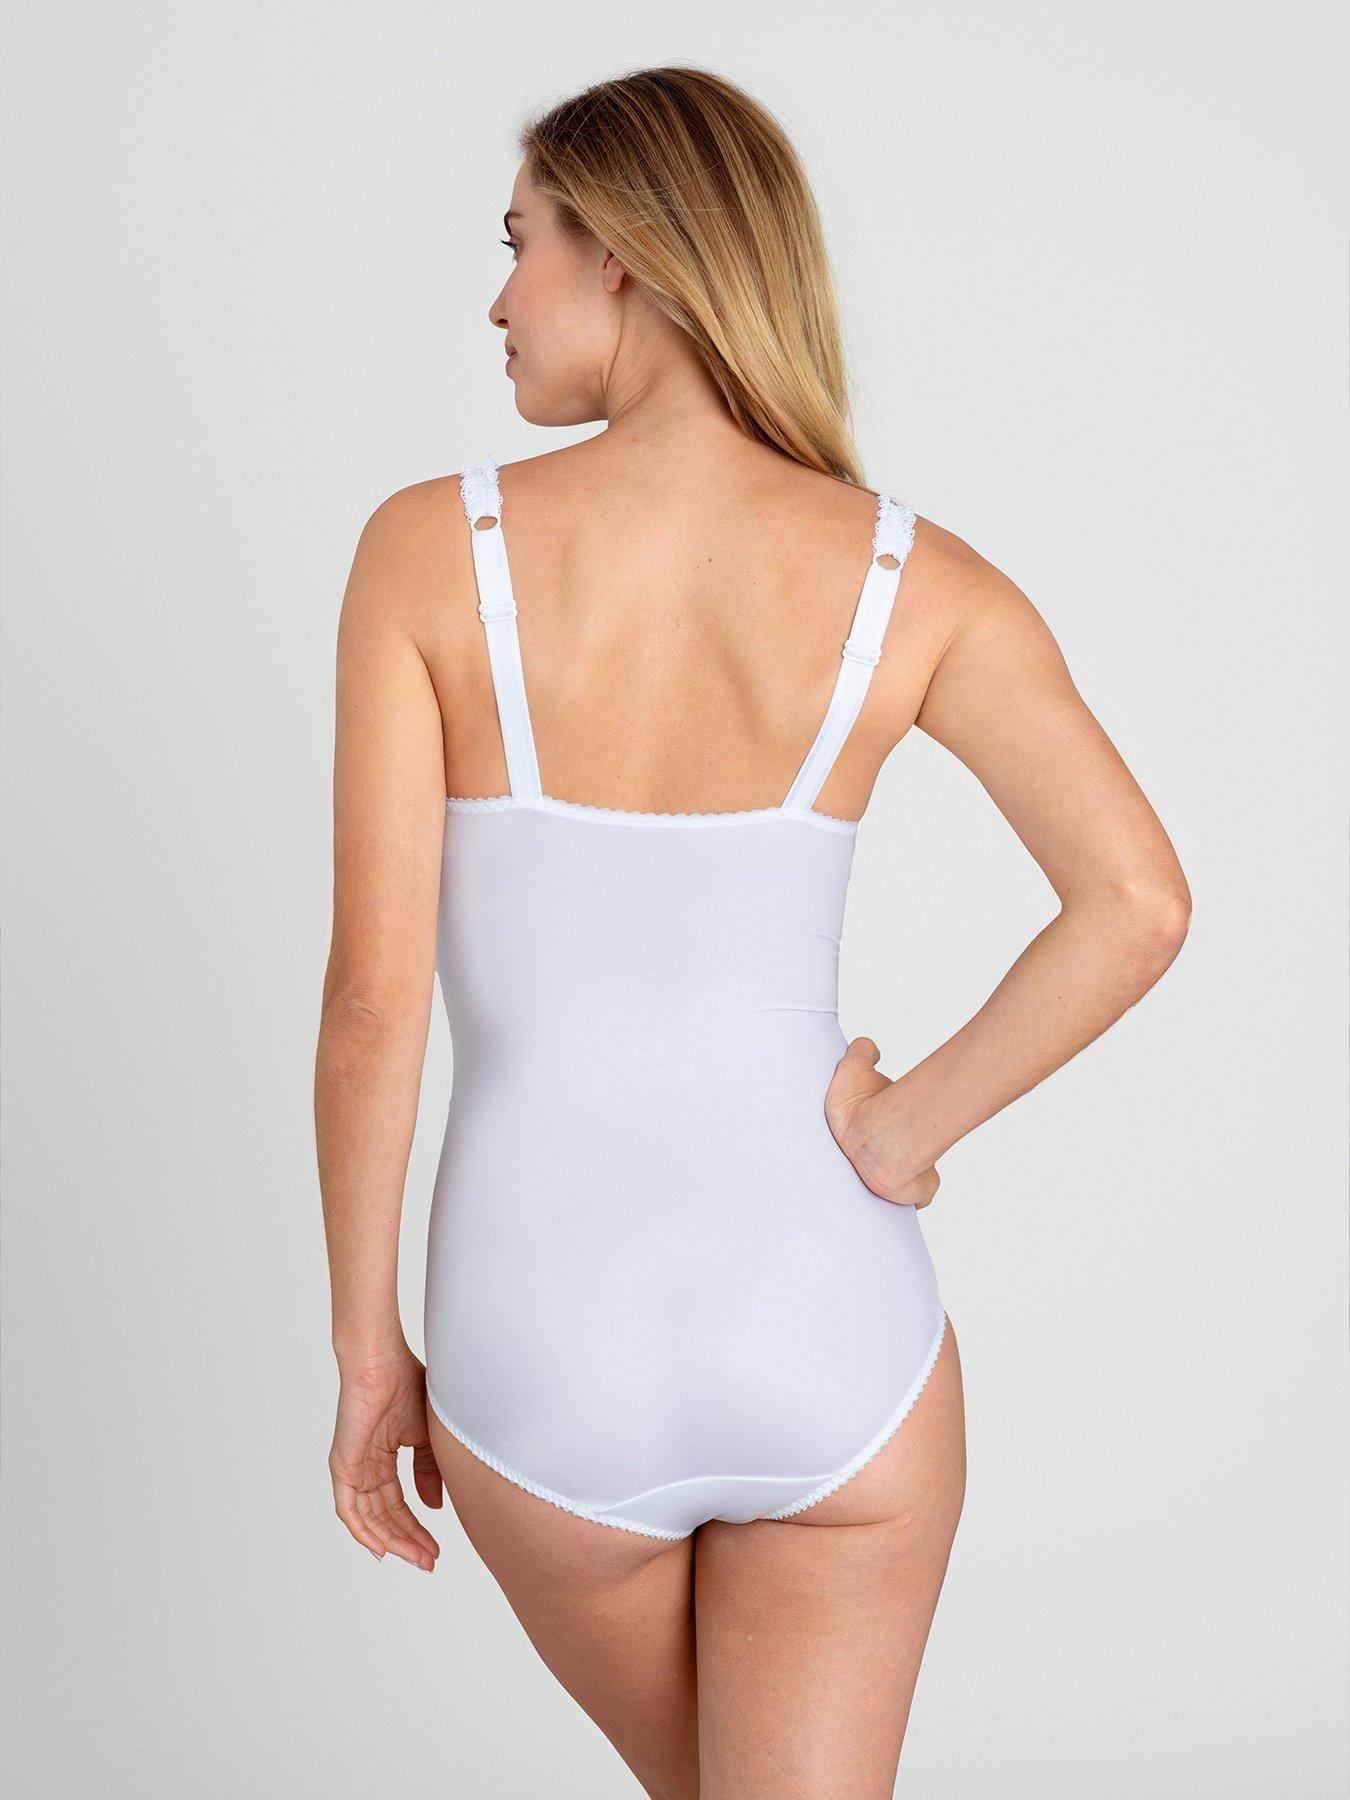 Nude Body Shaper Corset 36 C Onesie Lingerie Bodysuit… - Gem